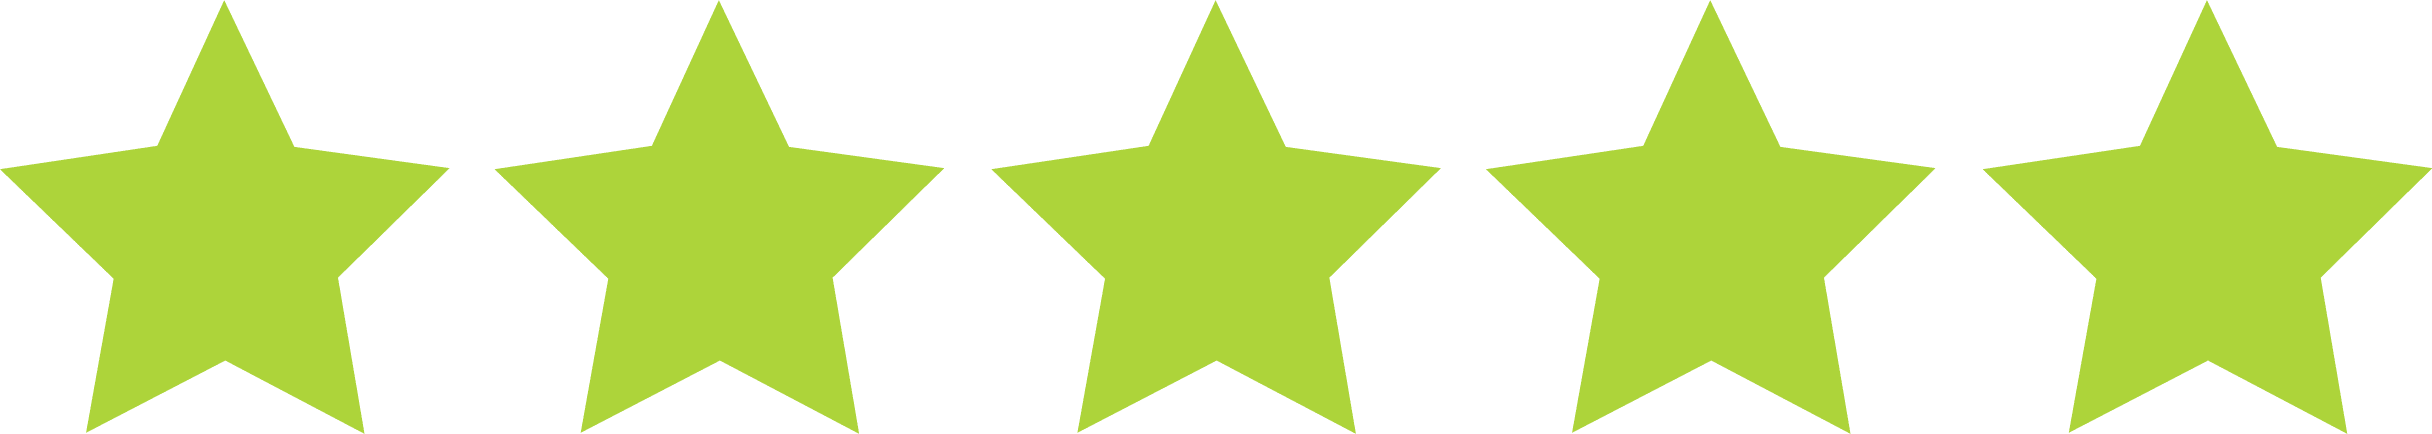 trustpilot star review